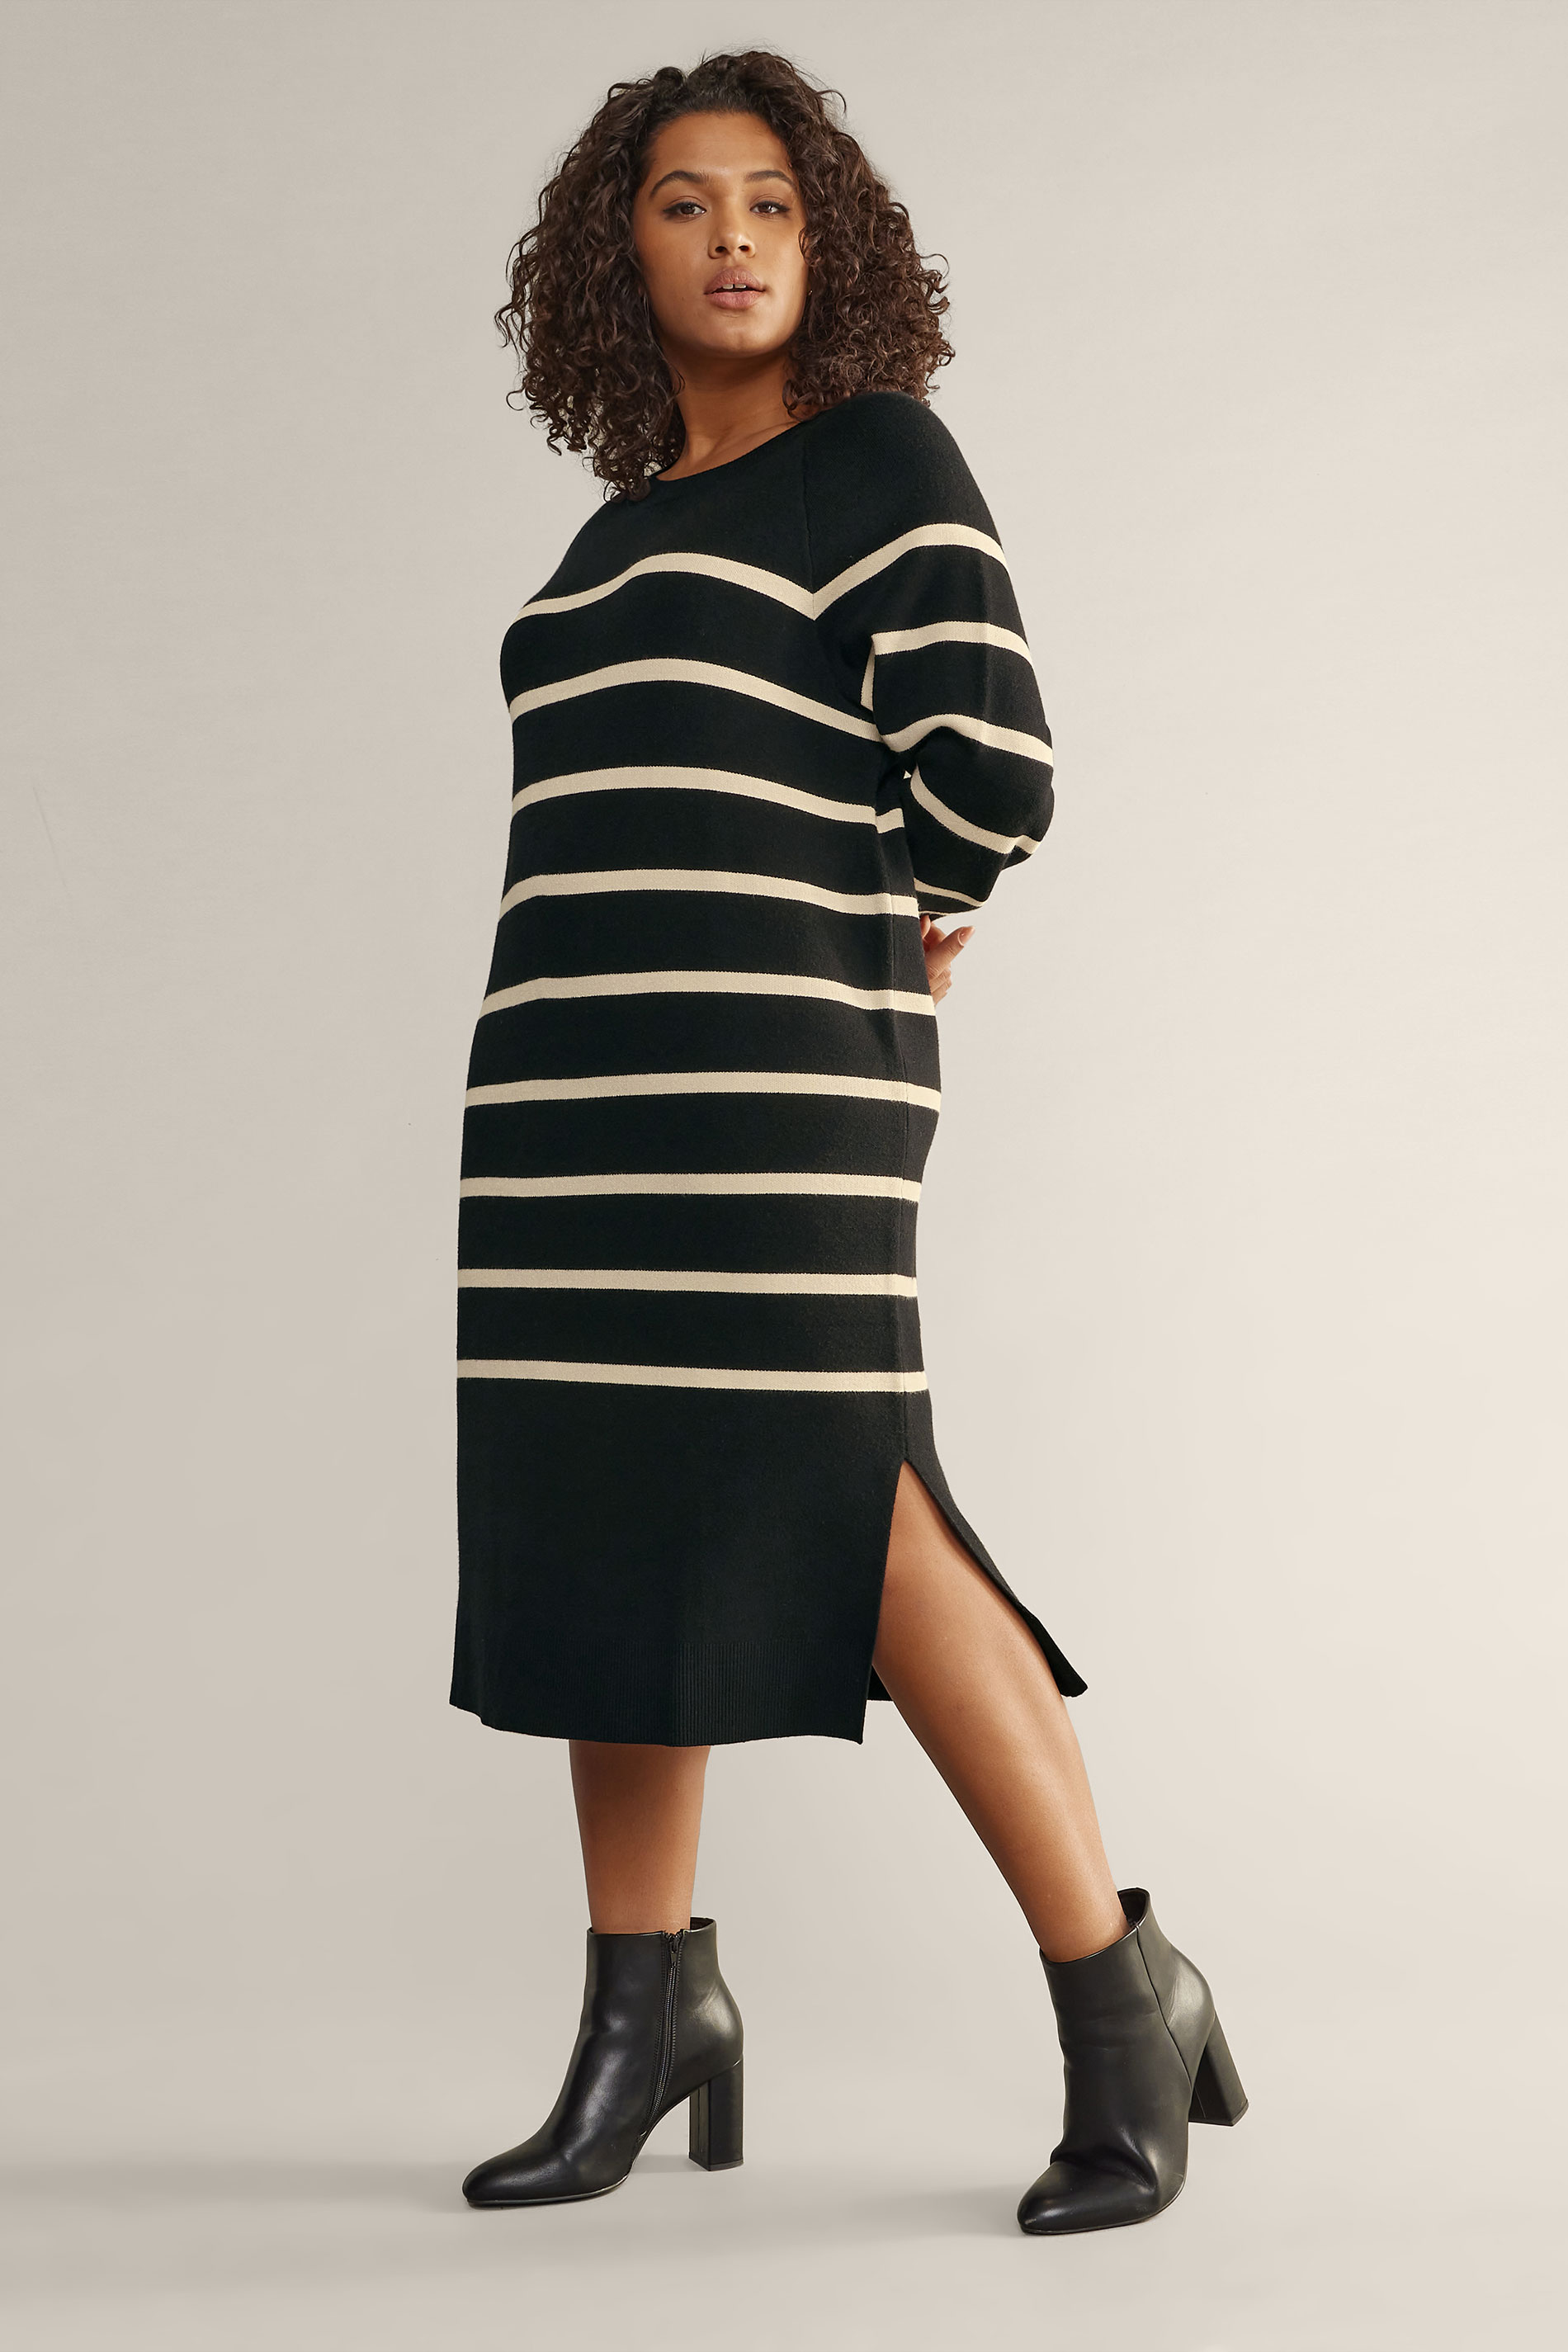 EVANS Plus Size Black & Ivory White Striped Knitted Jumper Dress | Evans 1